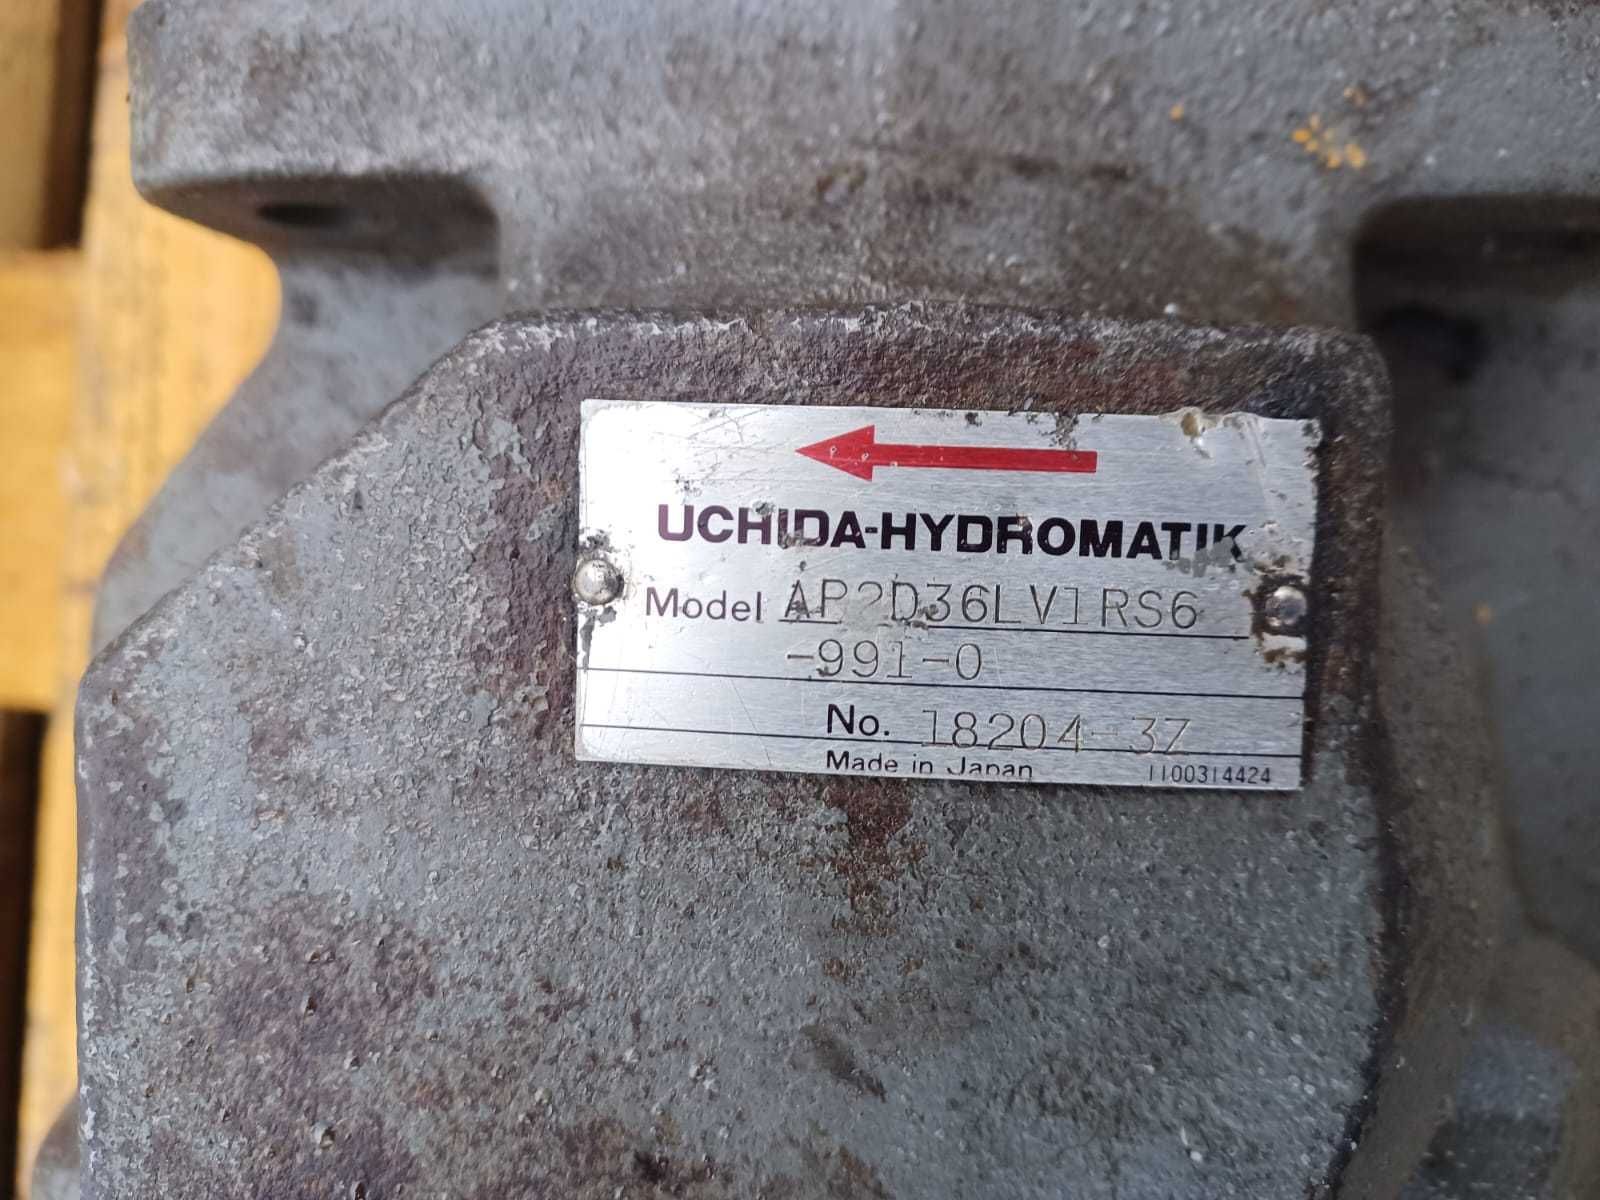 Pompa hidraulica Uchida Hydromatik AP2D36LV1RS6